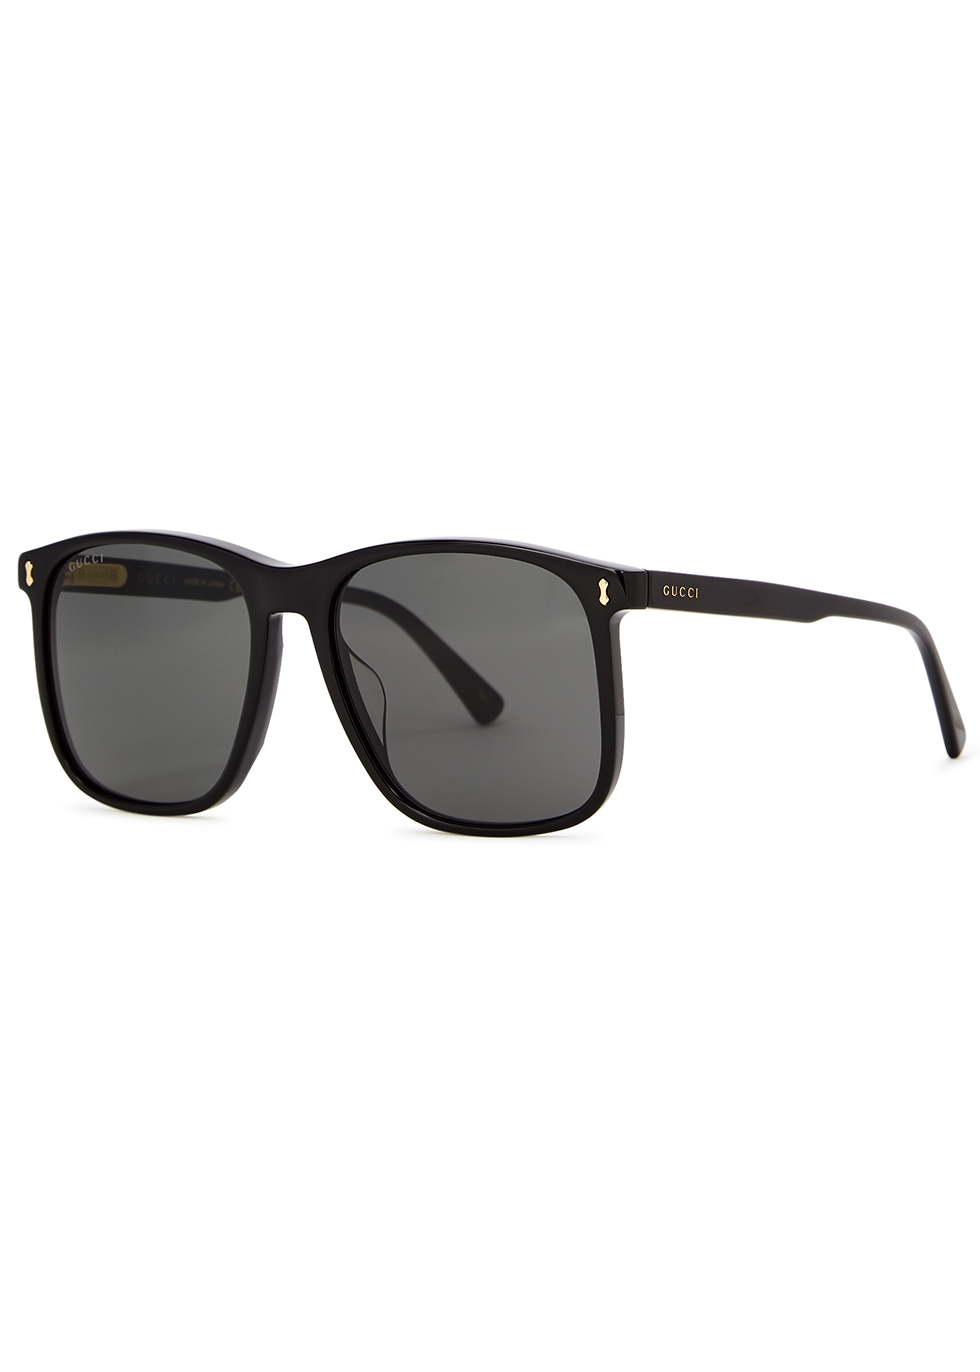 Gucci Politician black oversized sunglasses - Harvey Nichols